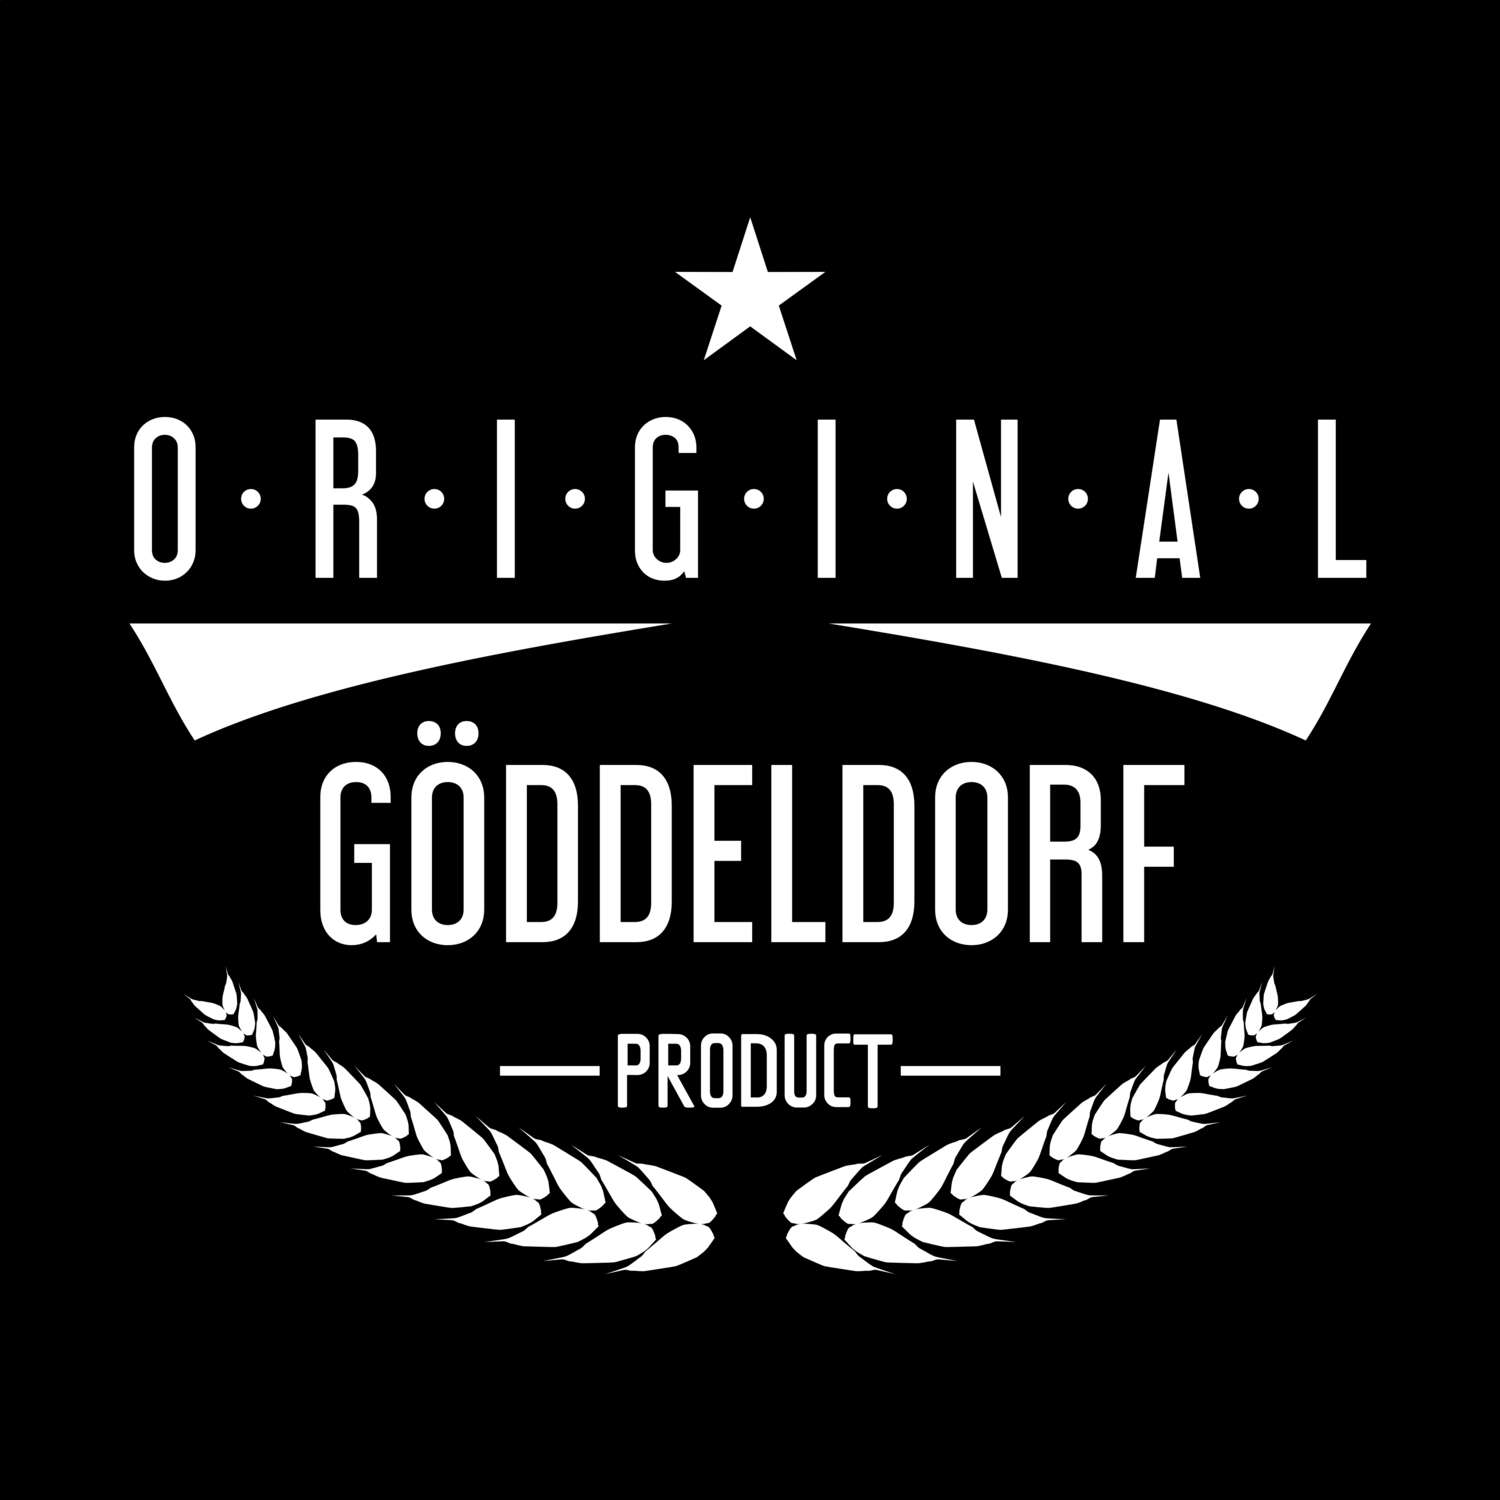 Göddeldorf T-Shirt »Original Product«